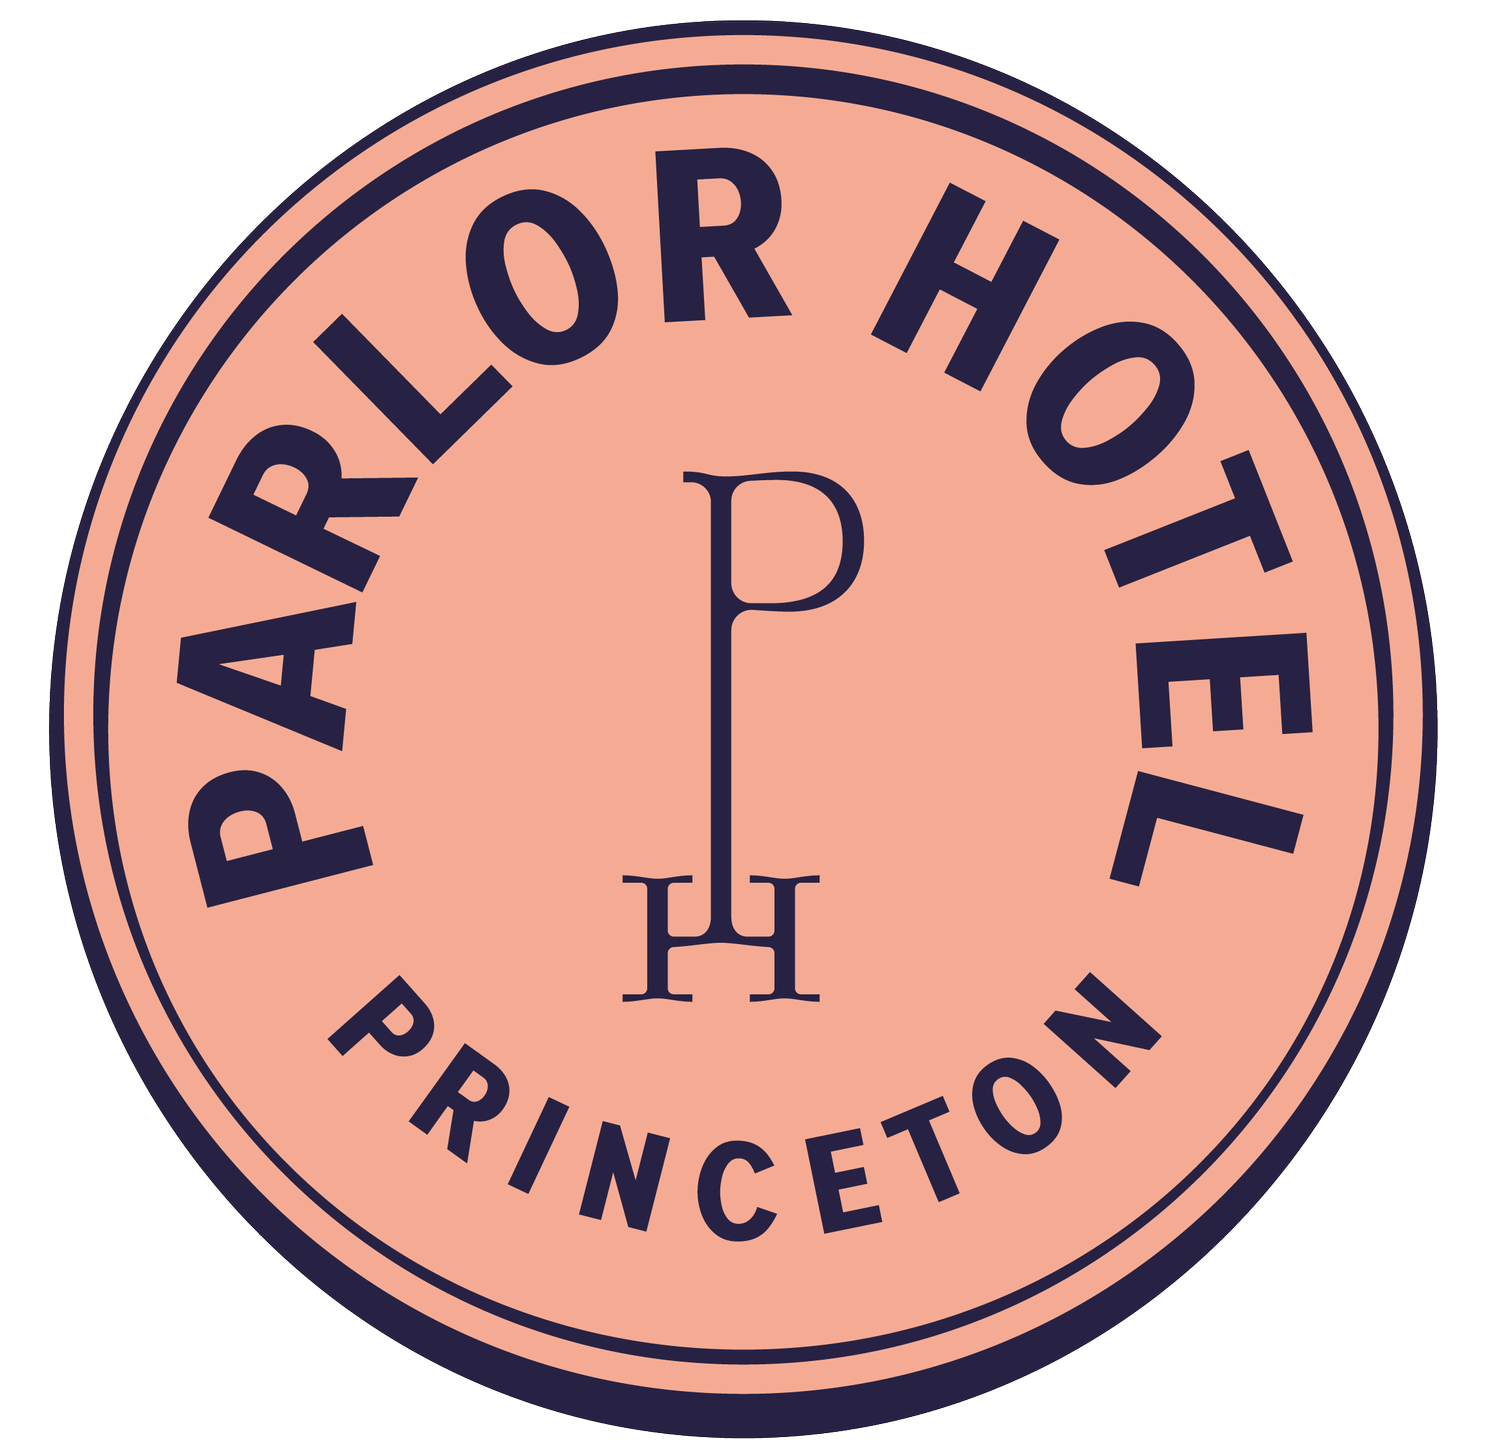 Parlor Hotel